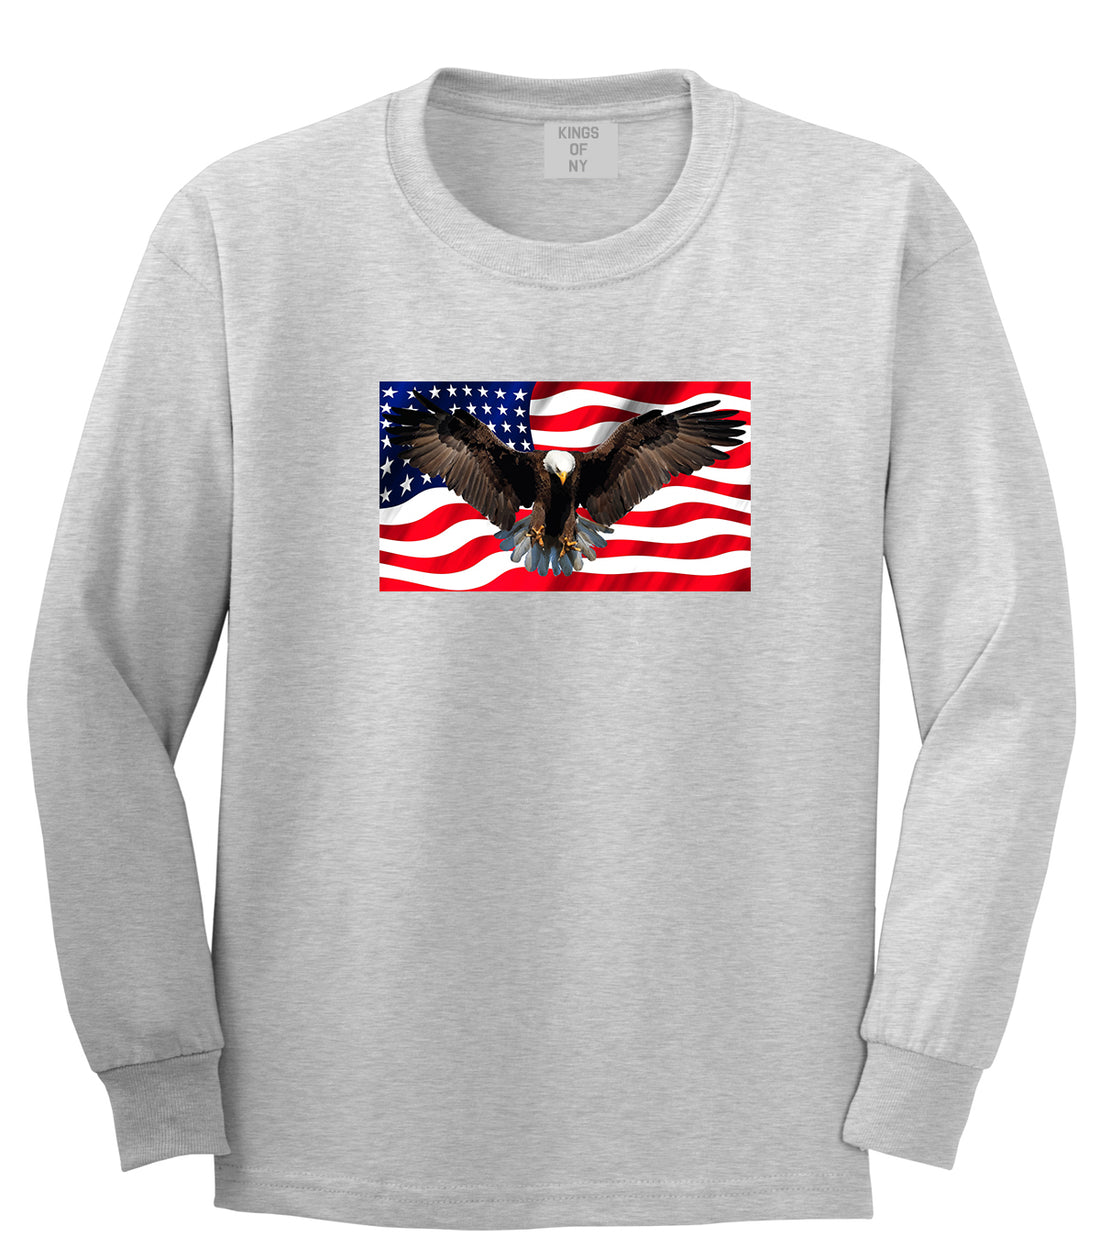 Bald Eagle American Flag Grey Long Sleeve T-Shirt by Kings Of NY